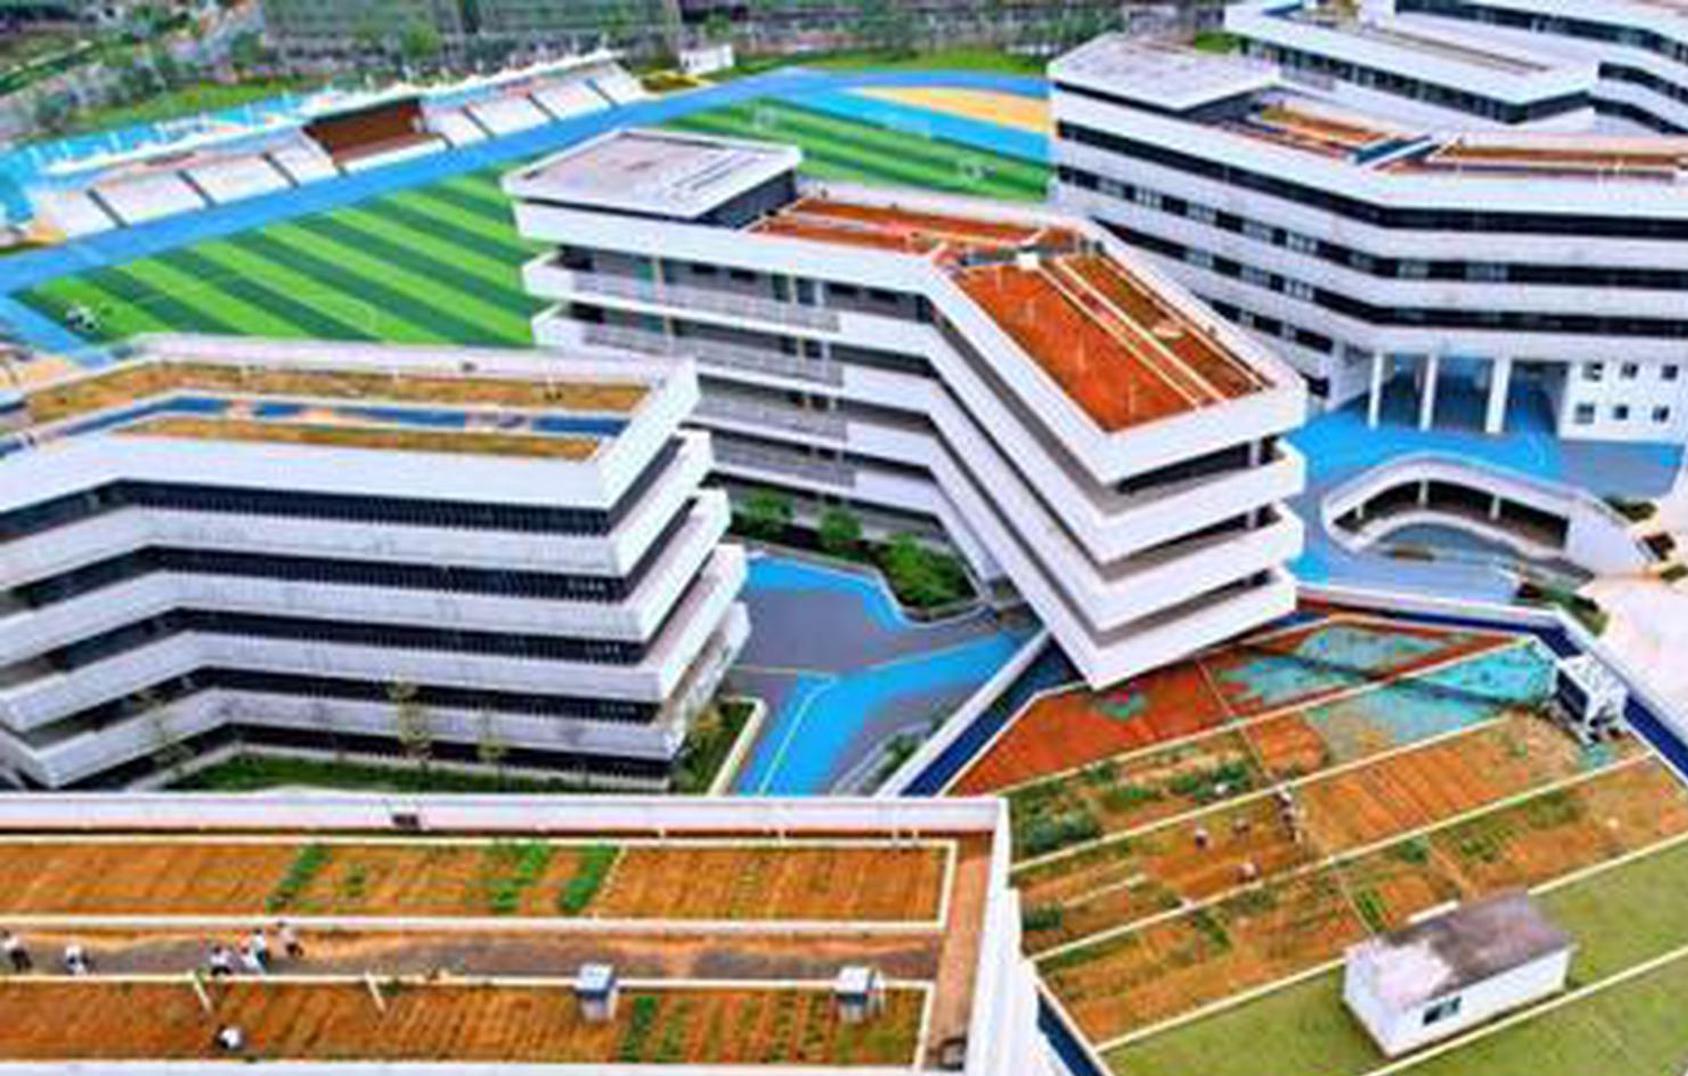 Rooftop gardens teach students art of vegetable growing